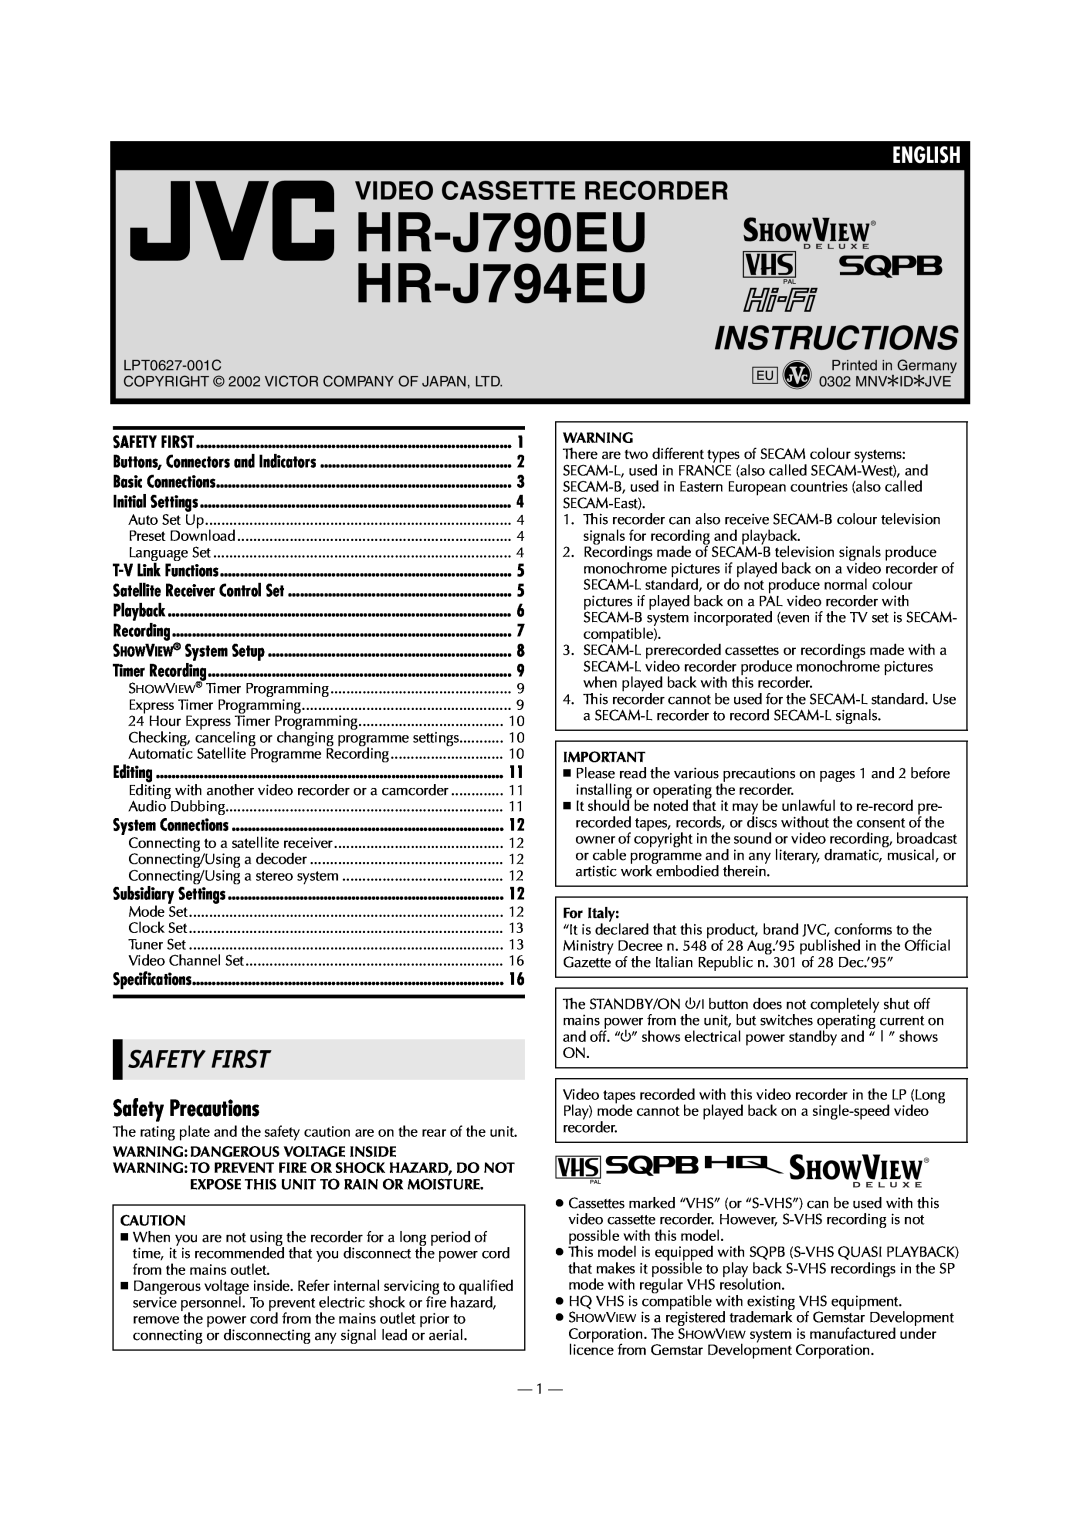 JVC specifications Safety First, Safety Precautions, HR-J790EU HR-J794EU, Instructions, Video Cassette Recorder 